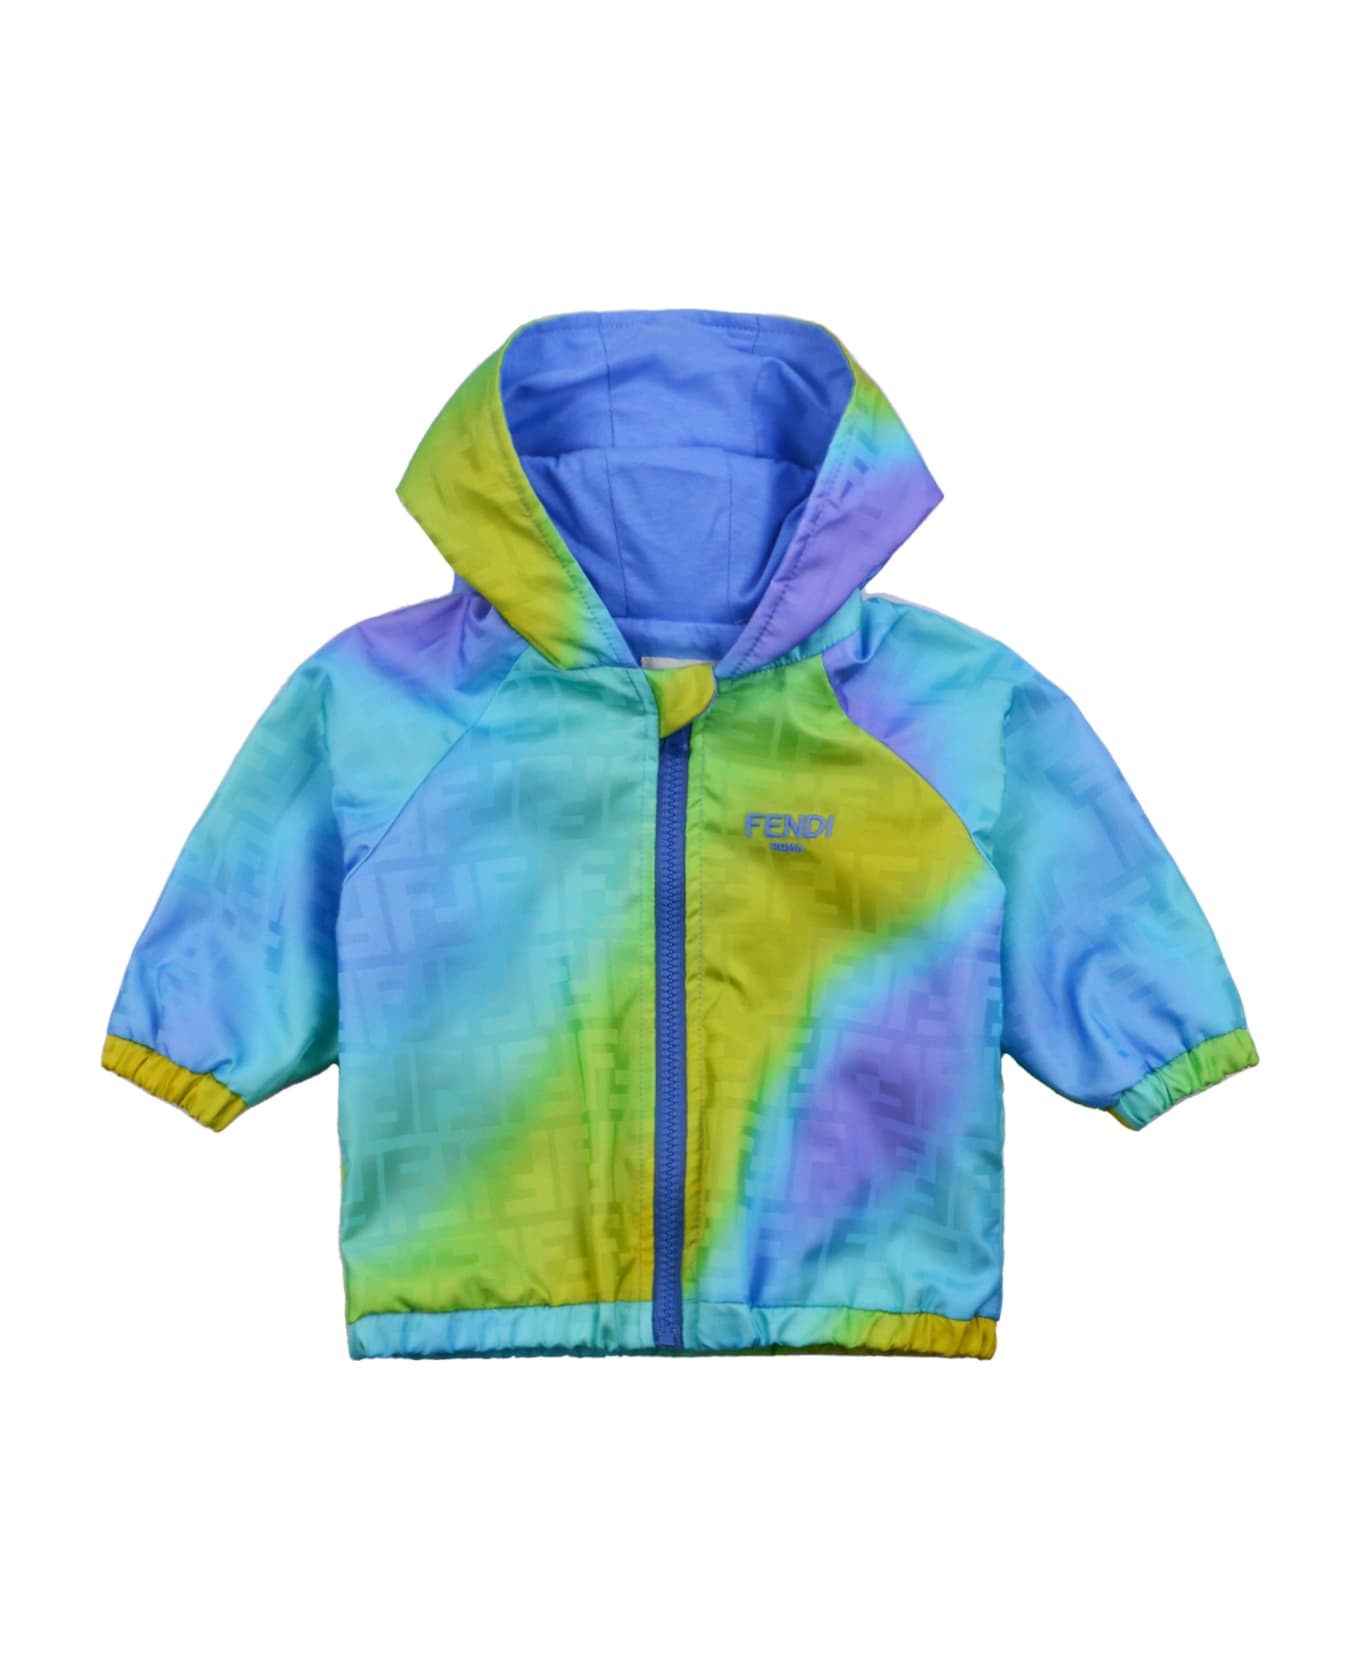 Fendi Nylon Jacket With Hood - Multicolor